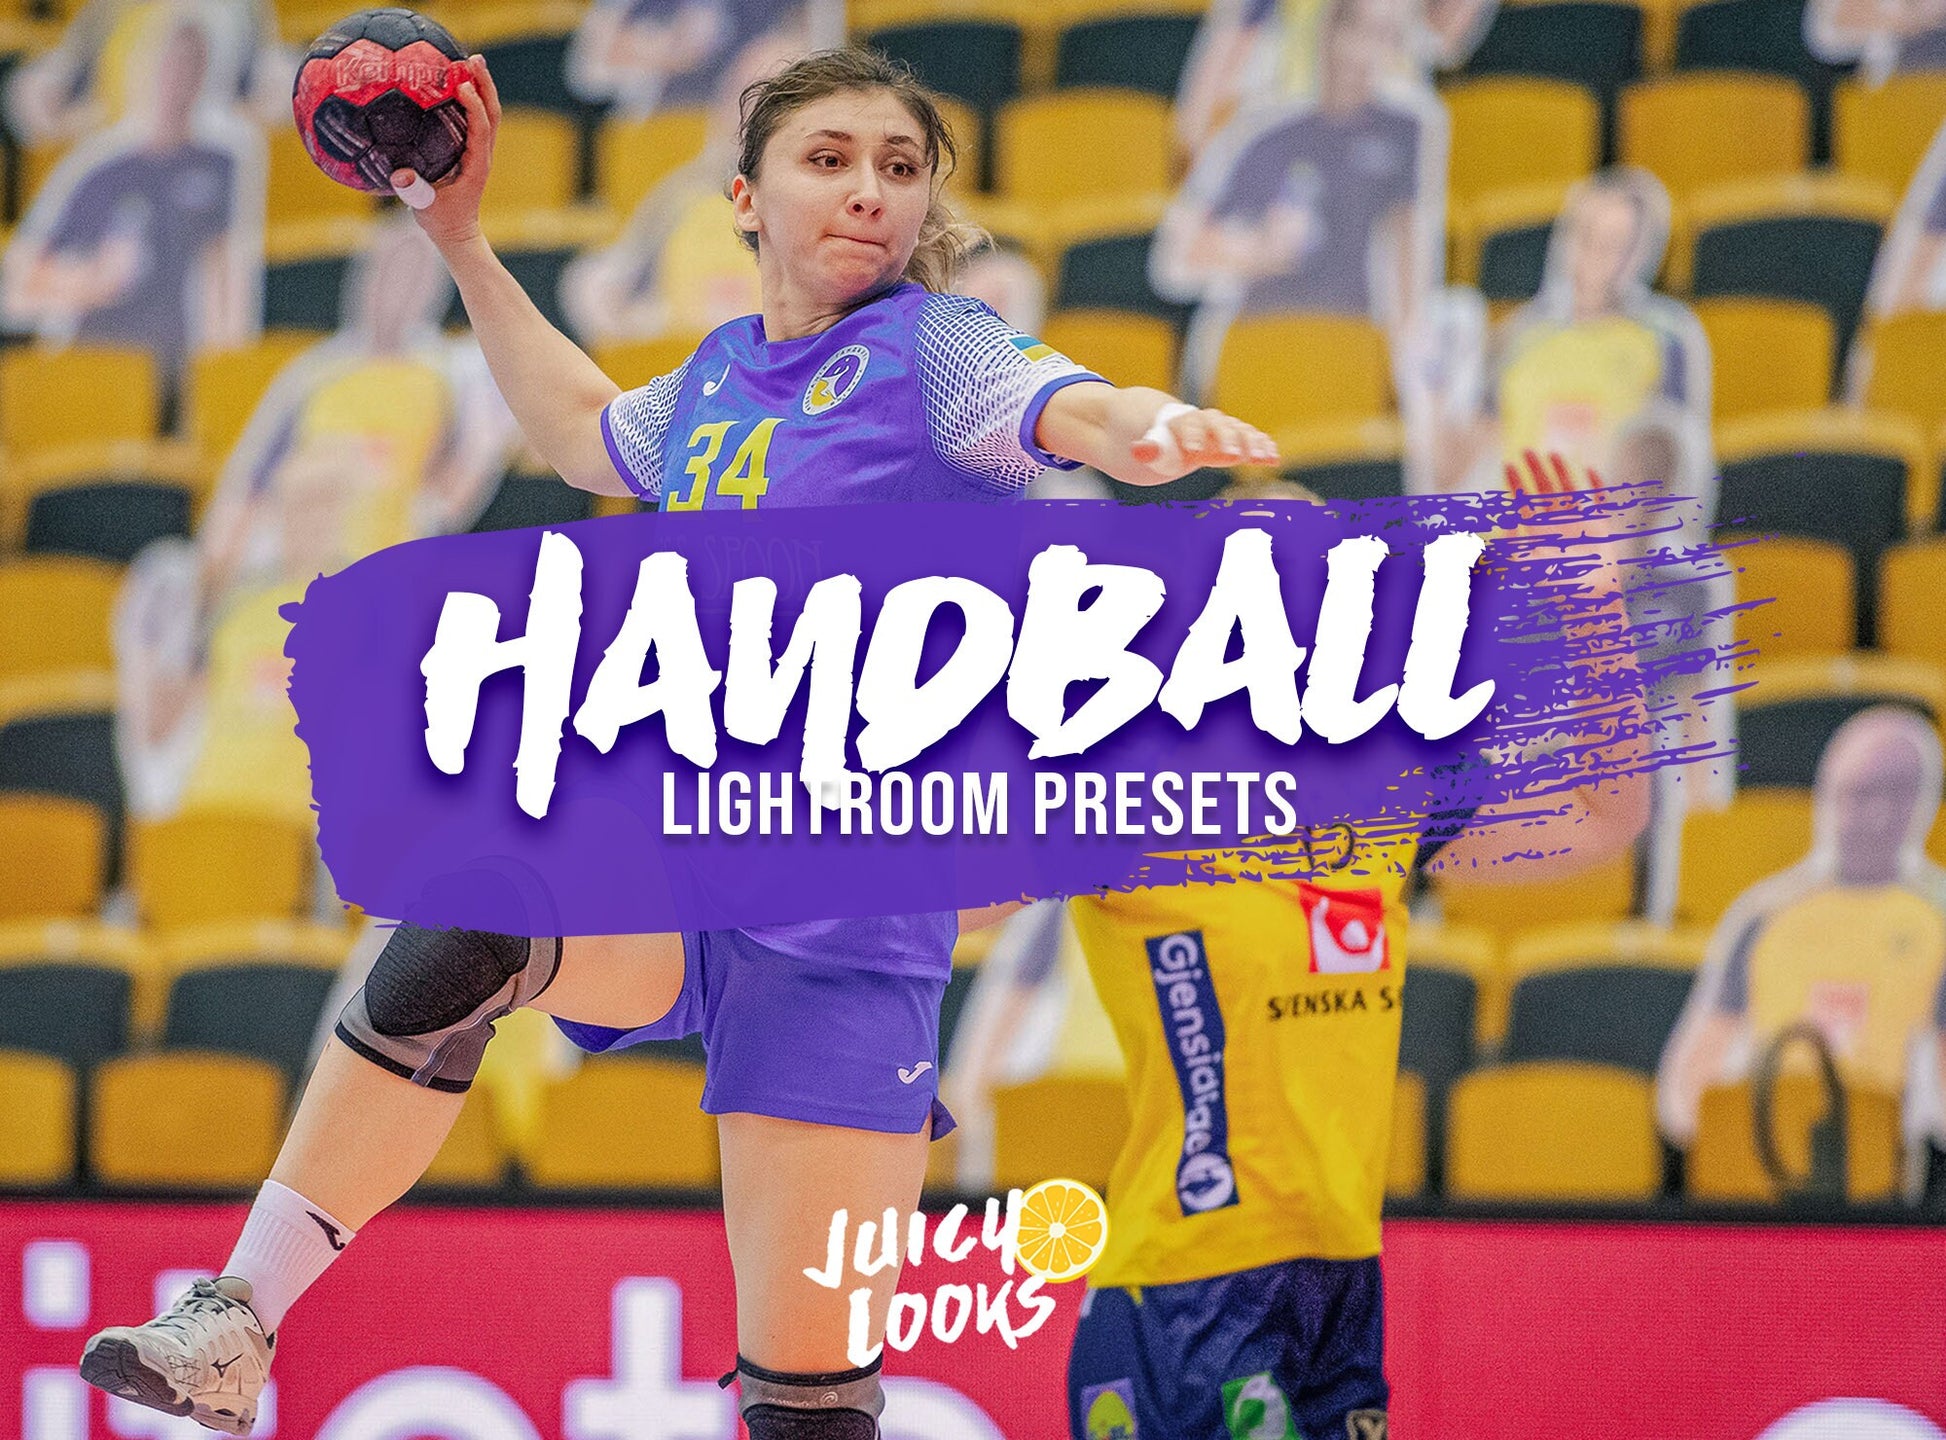 Handball Lightroom Presets for Mobile & Desktop - Juicy Looks Presets